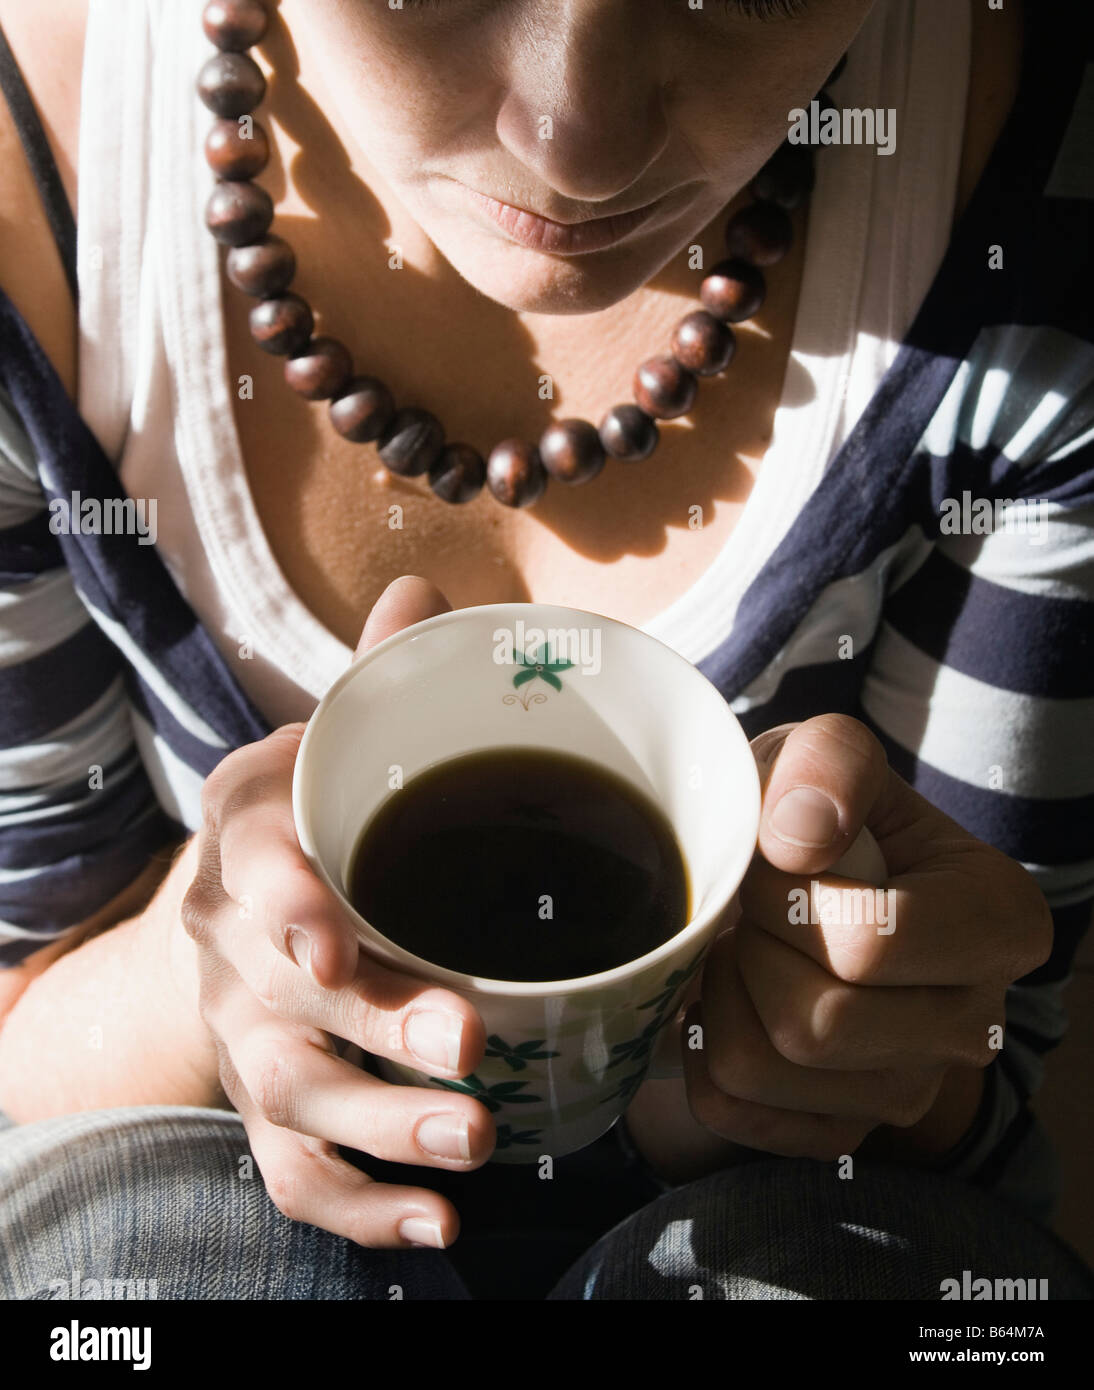 Young woman drinking mug of coffee Stock Photo